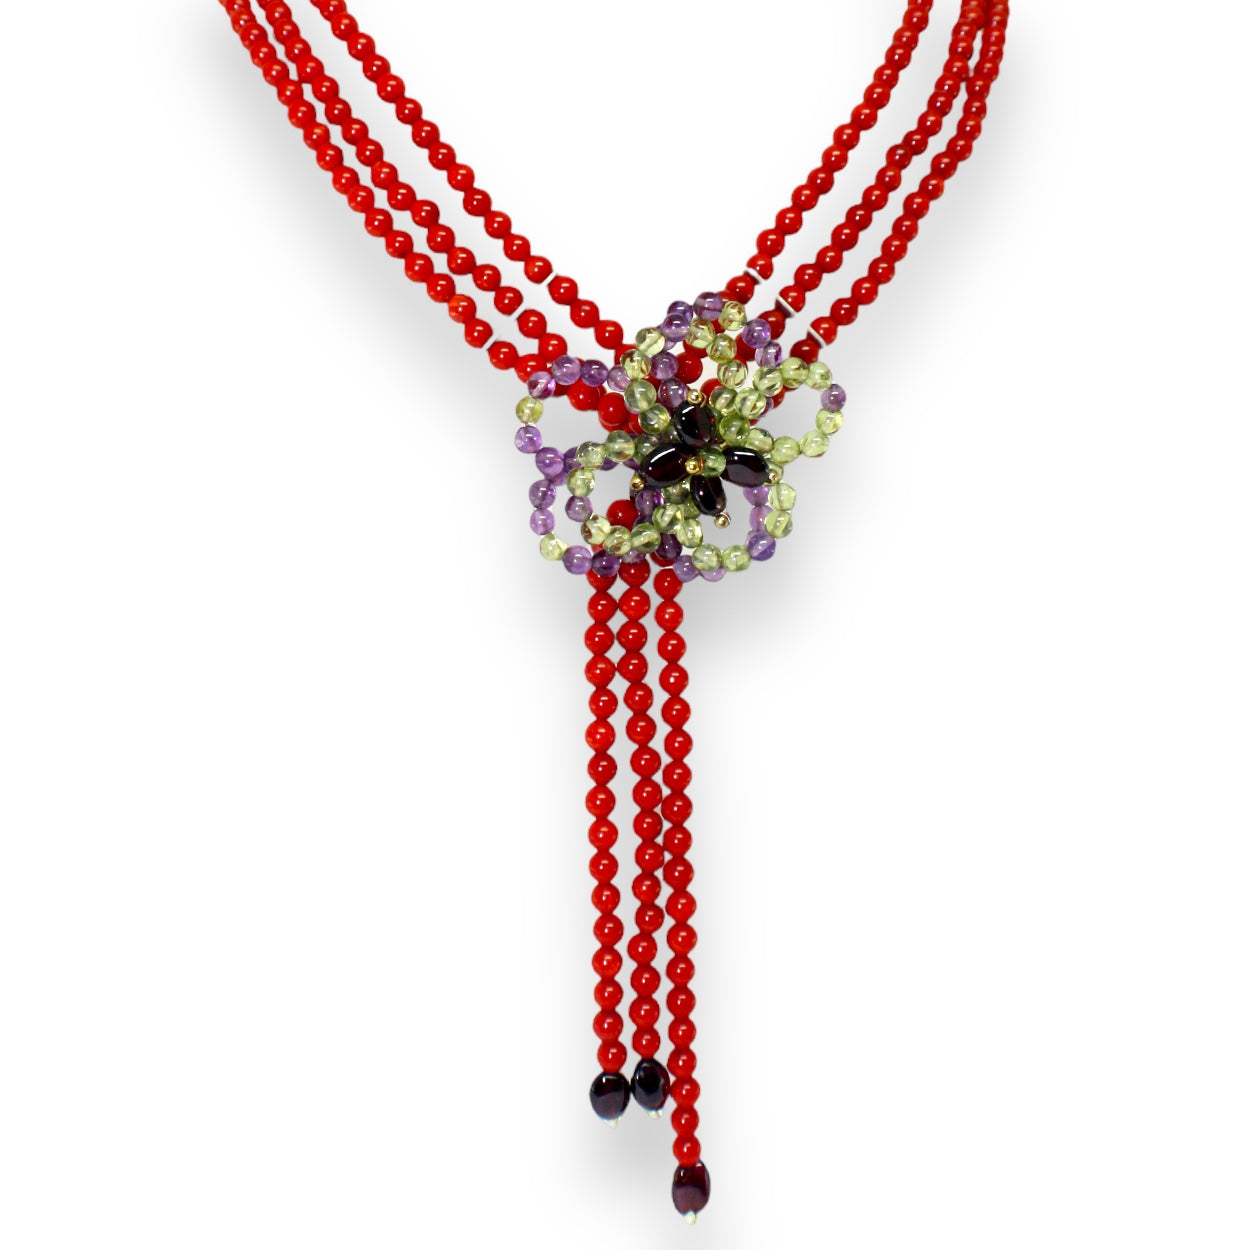 Natural Handmade Necklace 16"-18" Coral, Amethyst, Peridot, Garnet Gemstone Beads Jewellery